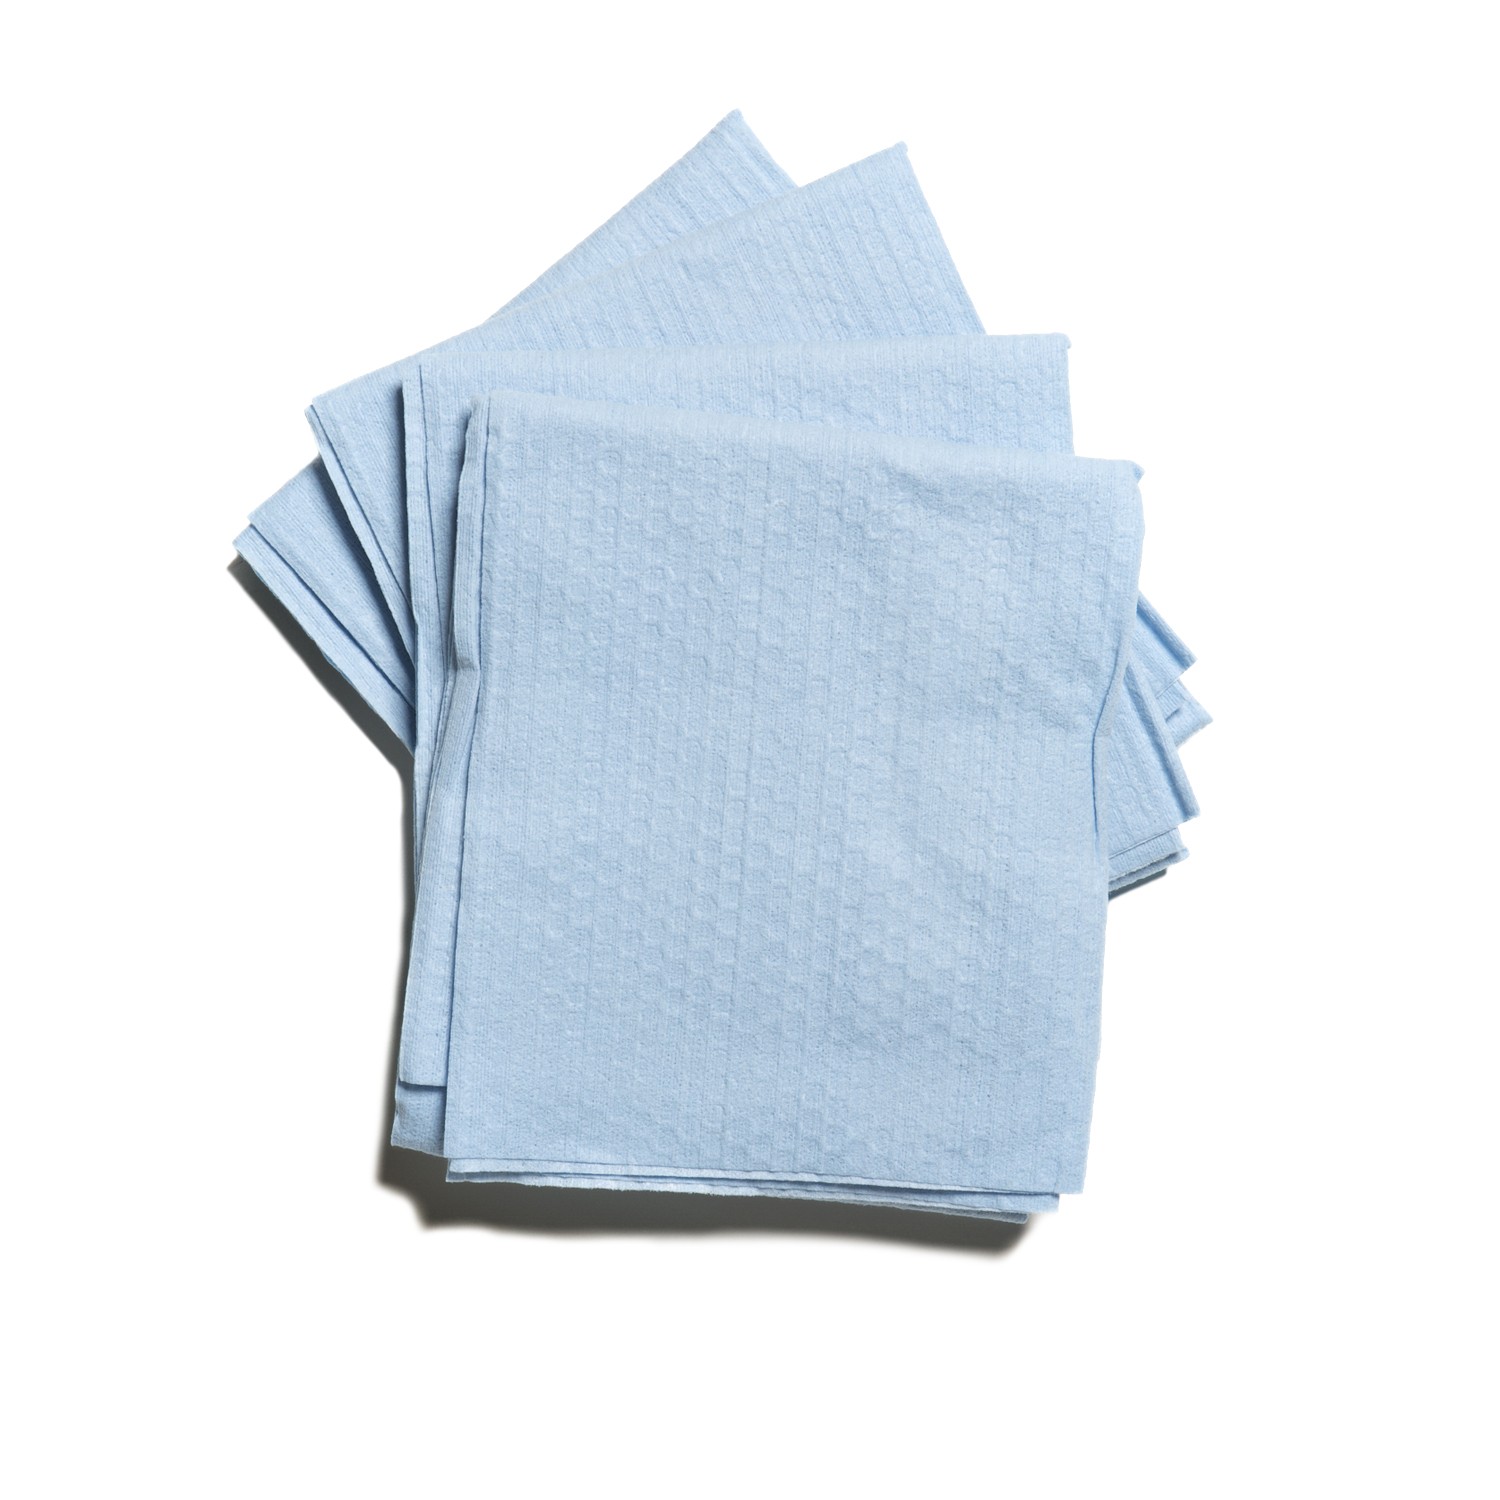 Disposable Medical Towel